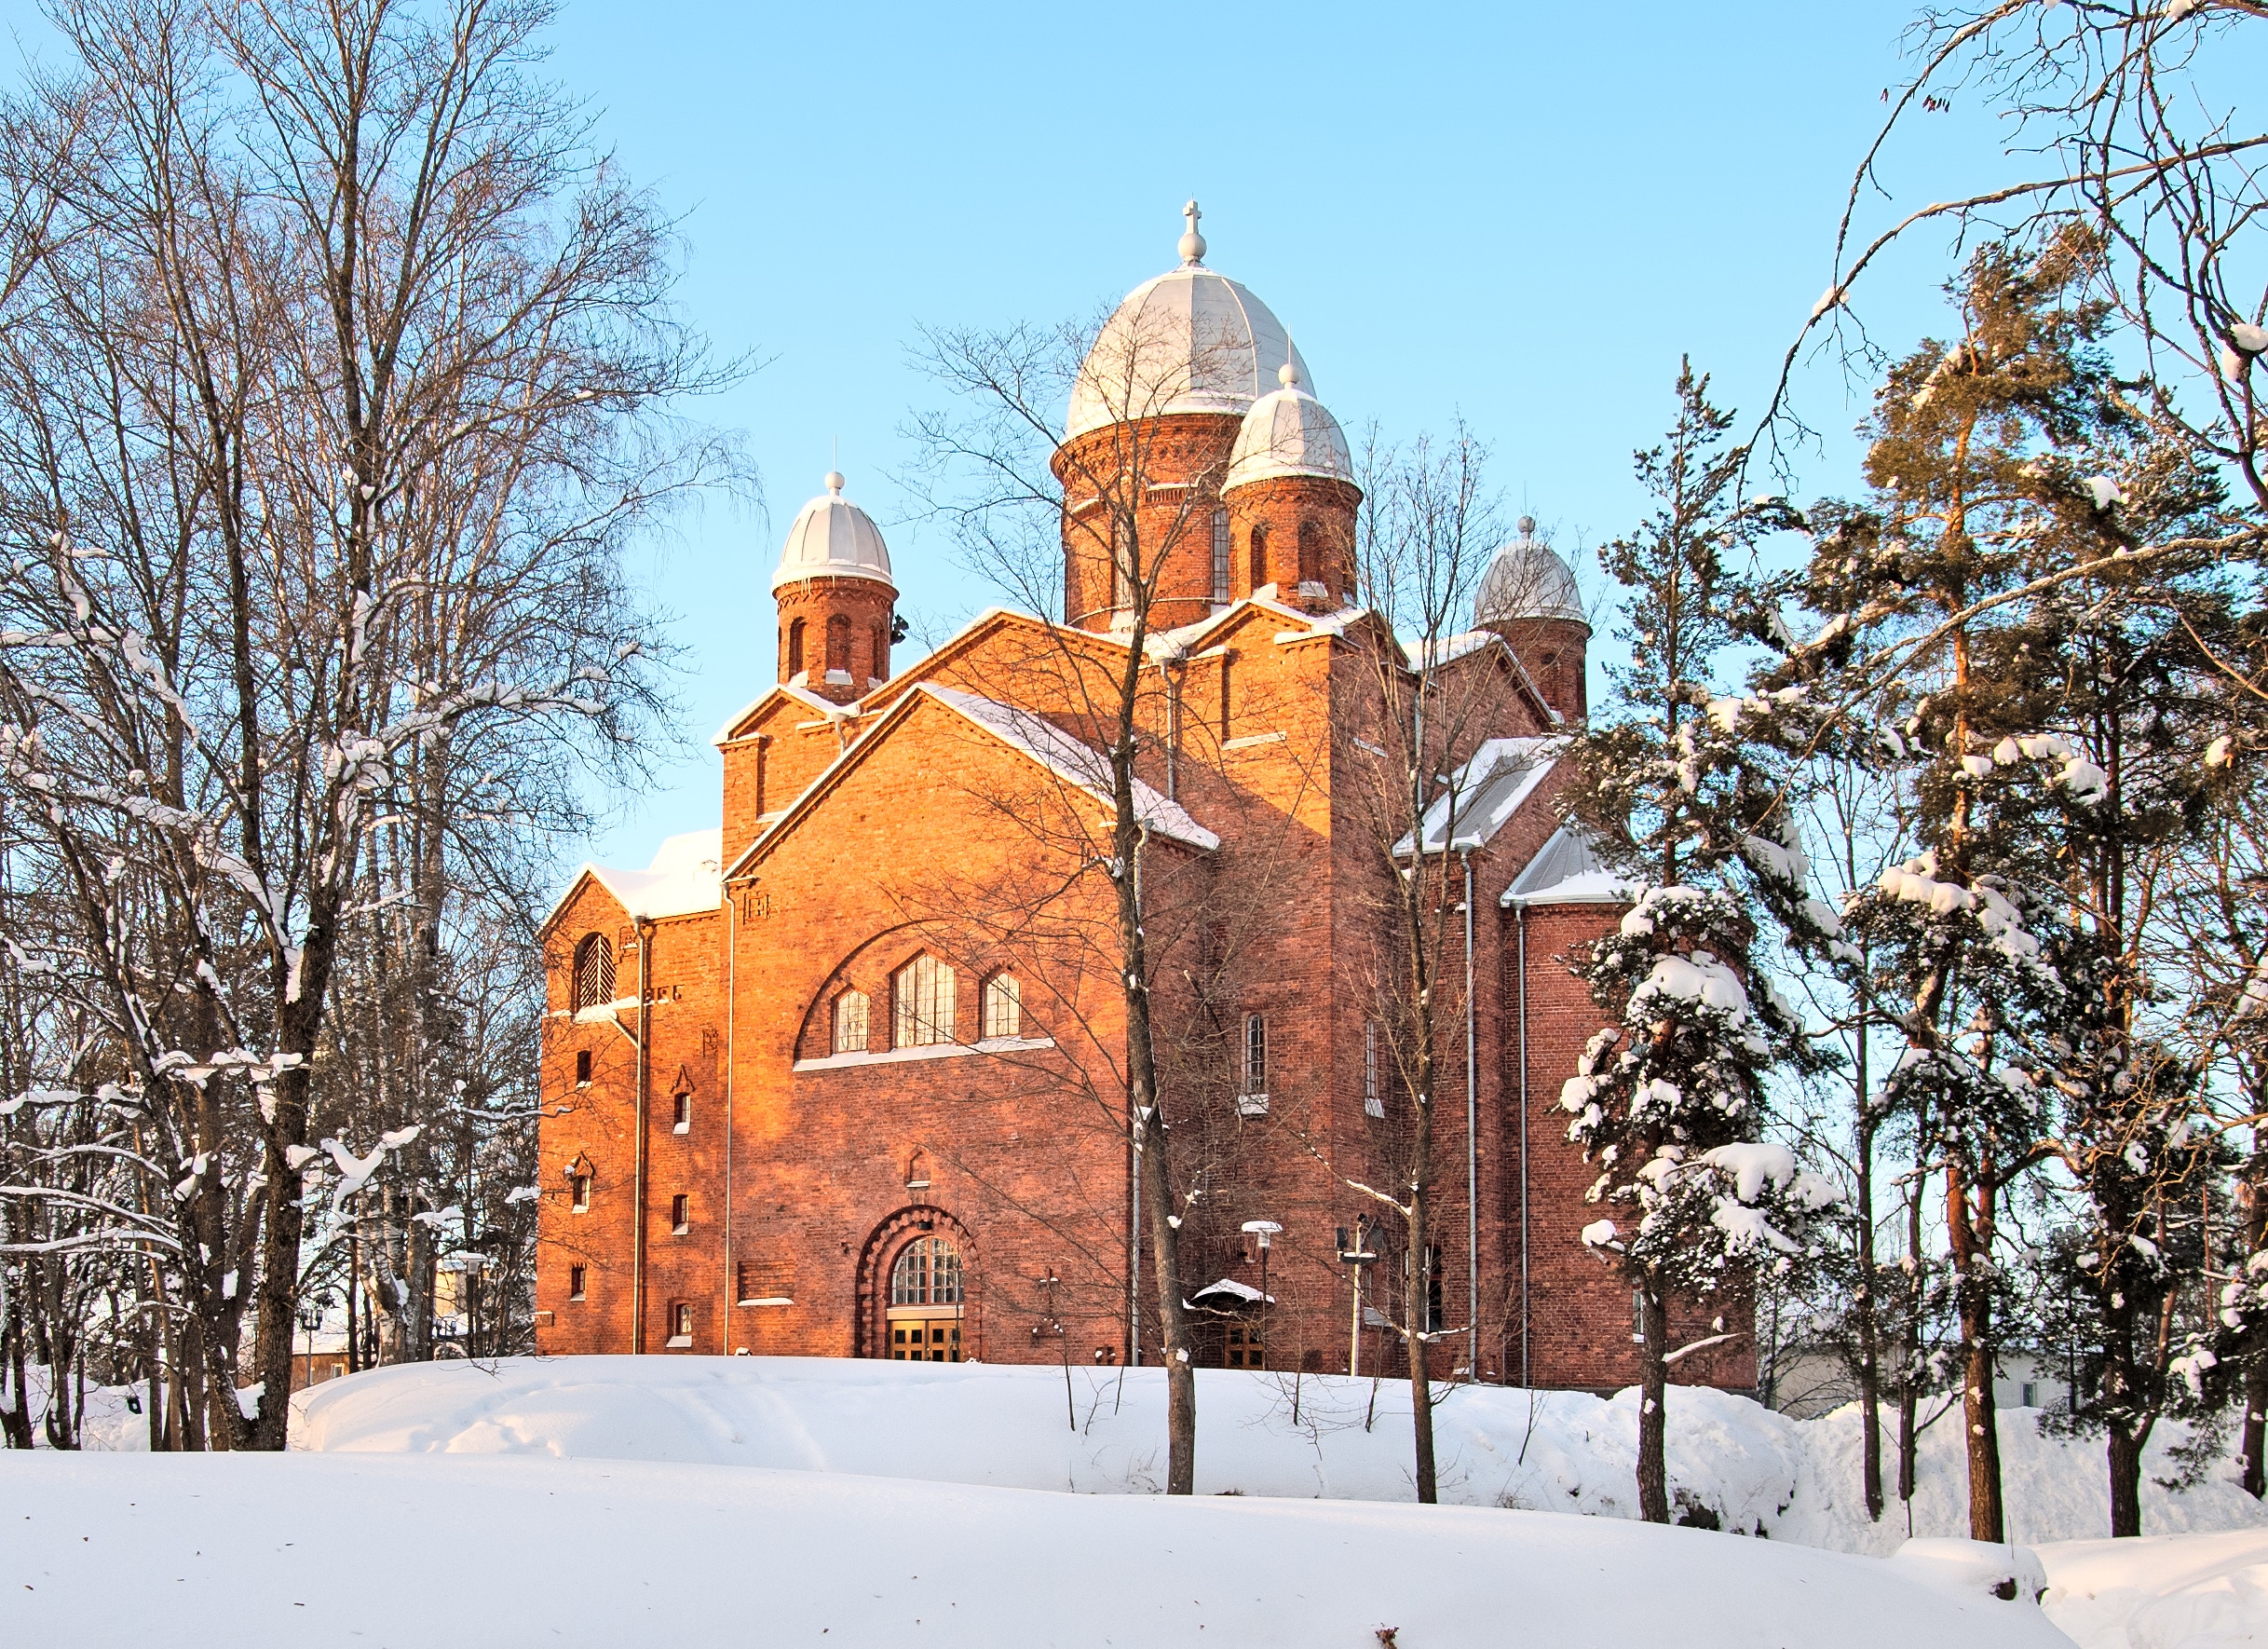 City lutheran church of Lappeenranta. Finland.